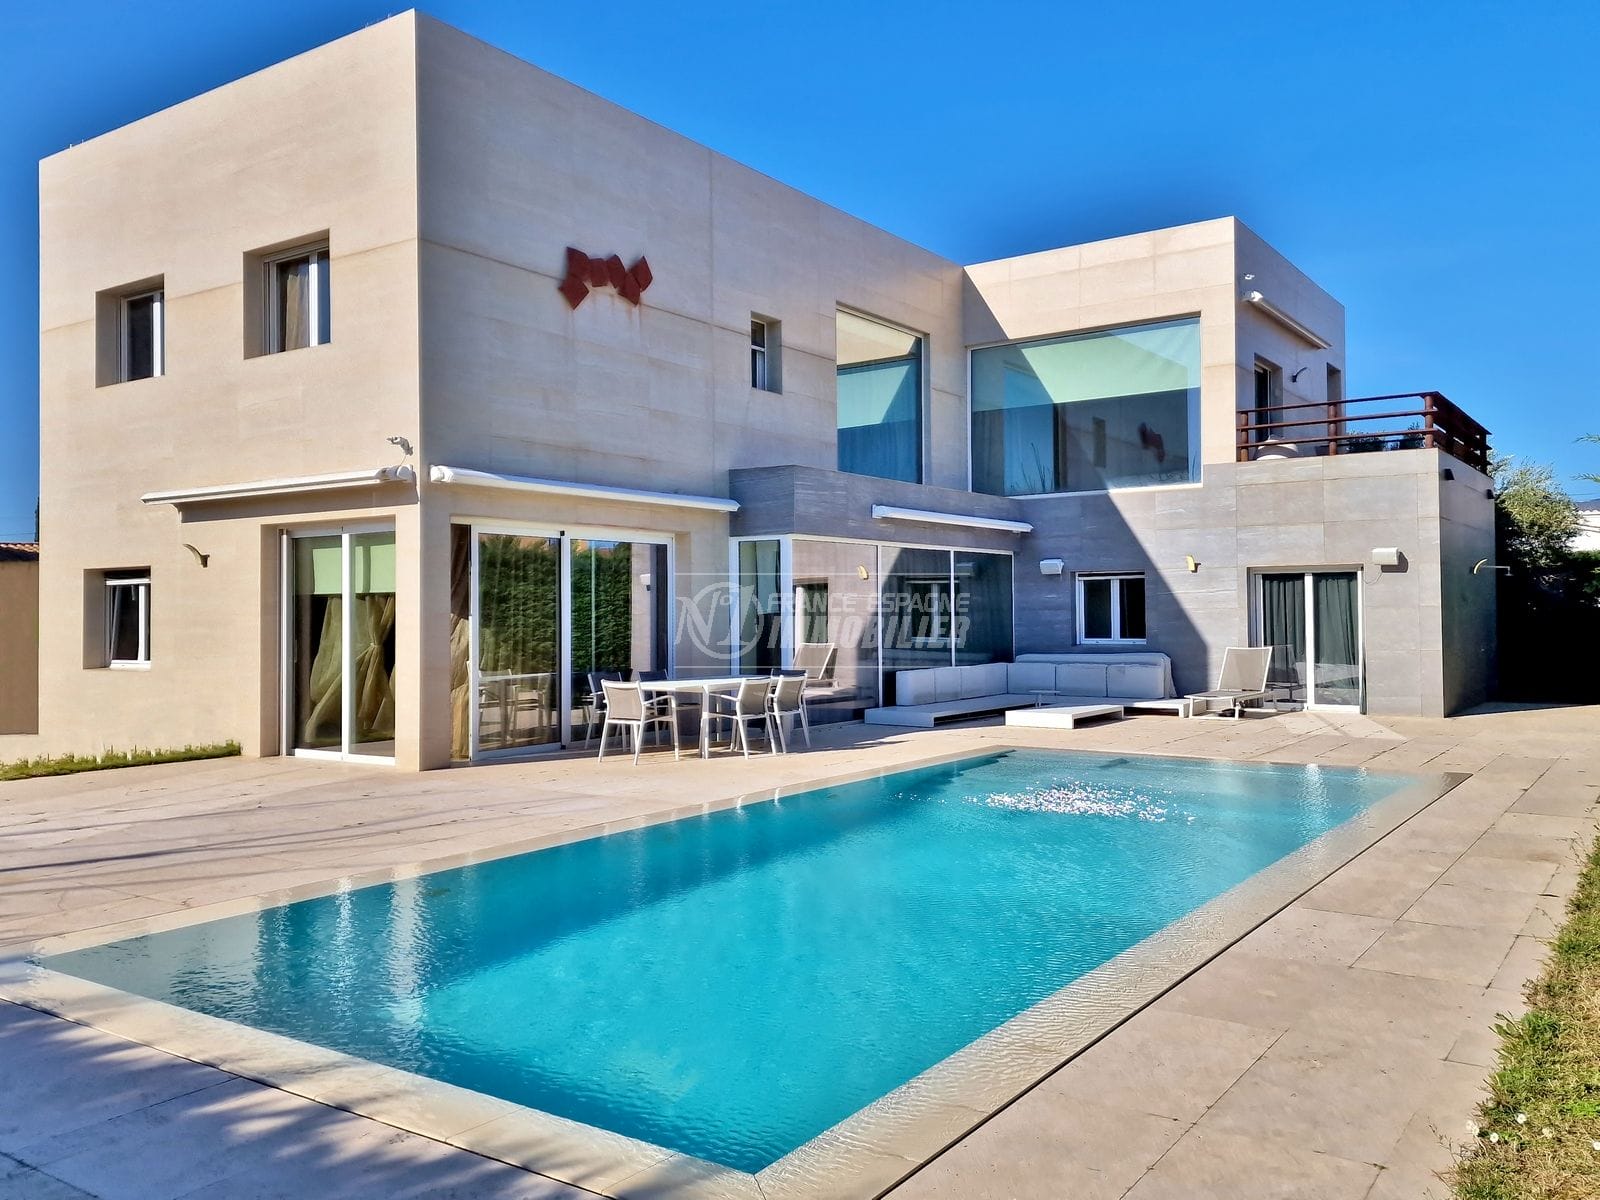 Empuriabrava - Contemporary villa, swimming pool, garage, beach 900m